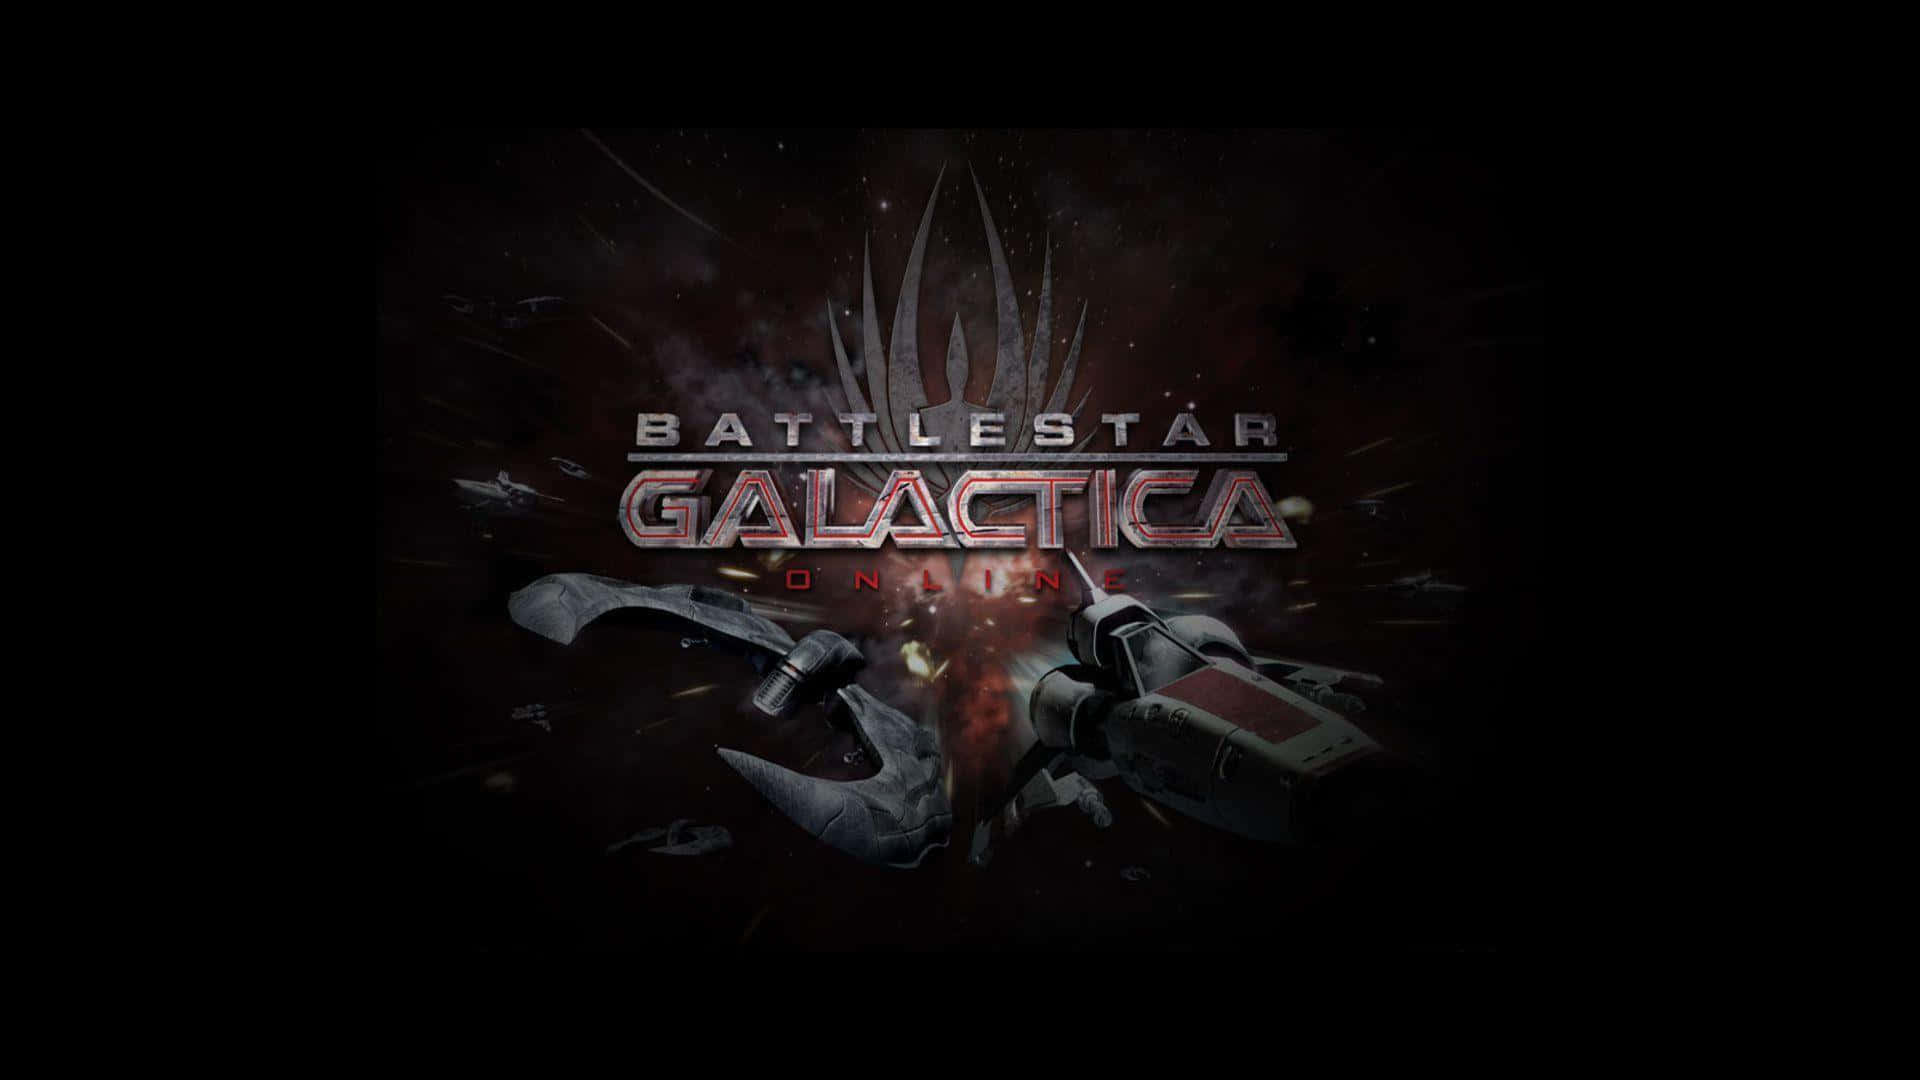 Battlestar Galactica Dark Poster Hd Wallpaper